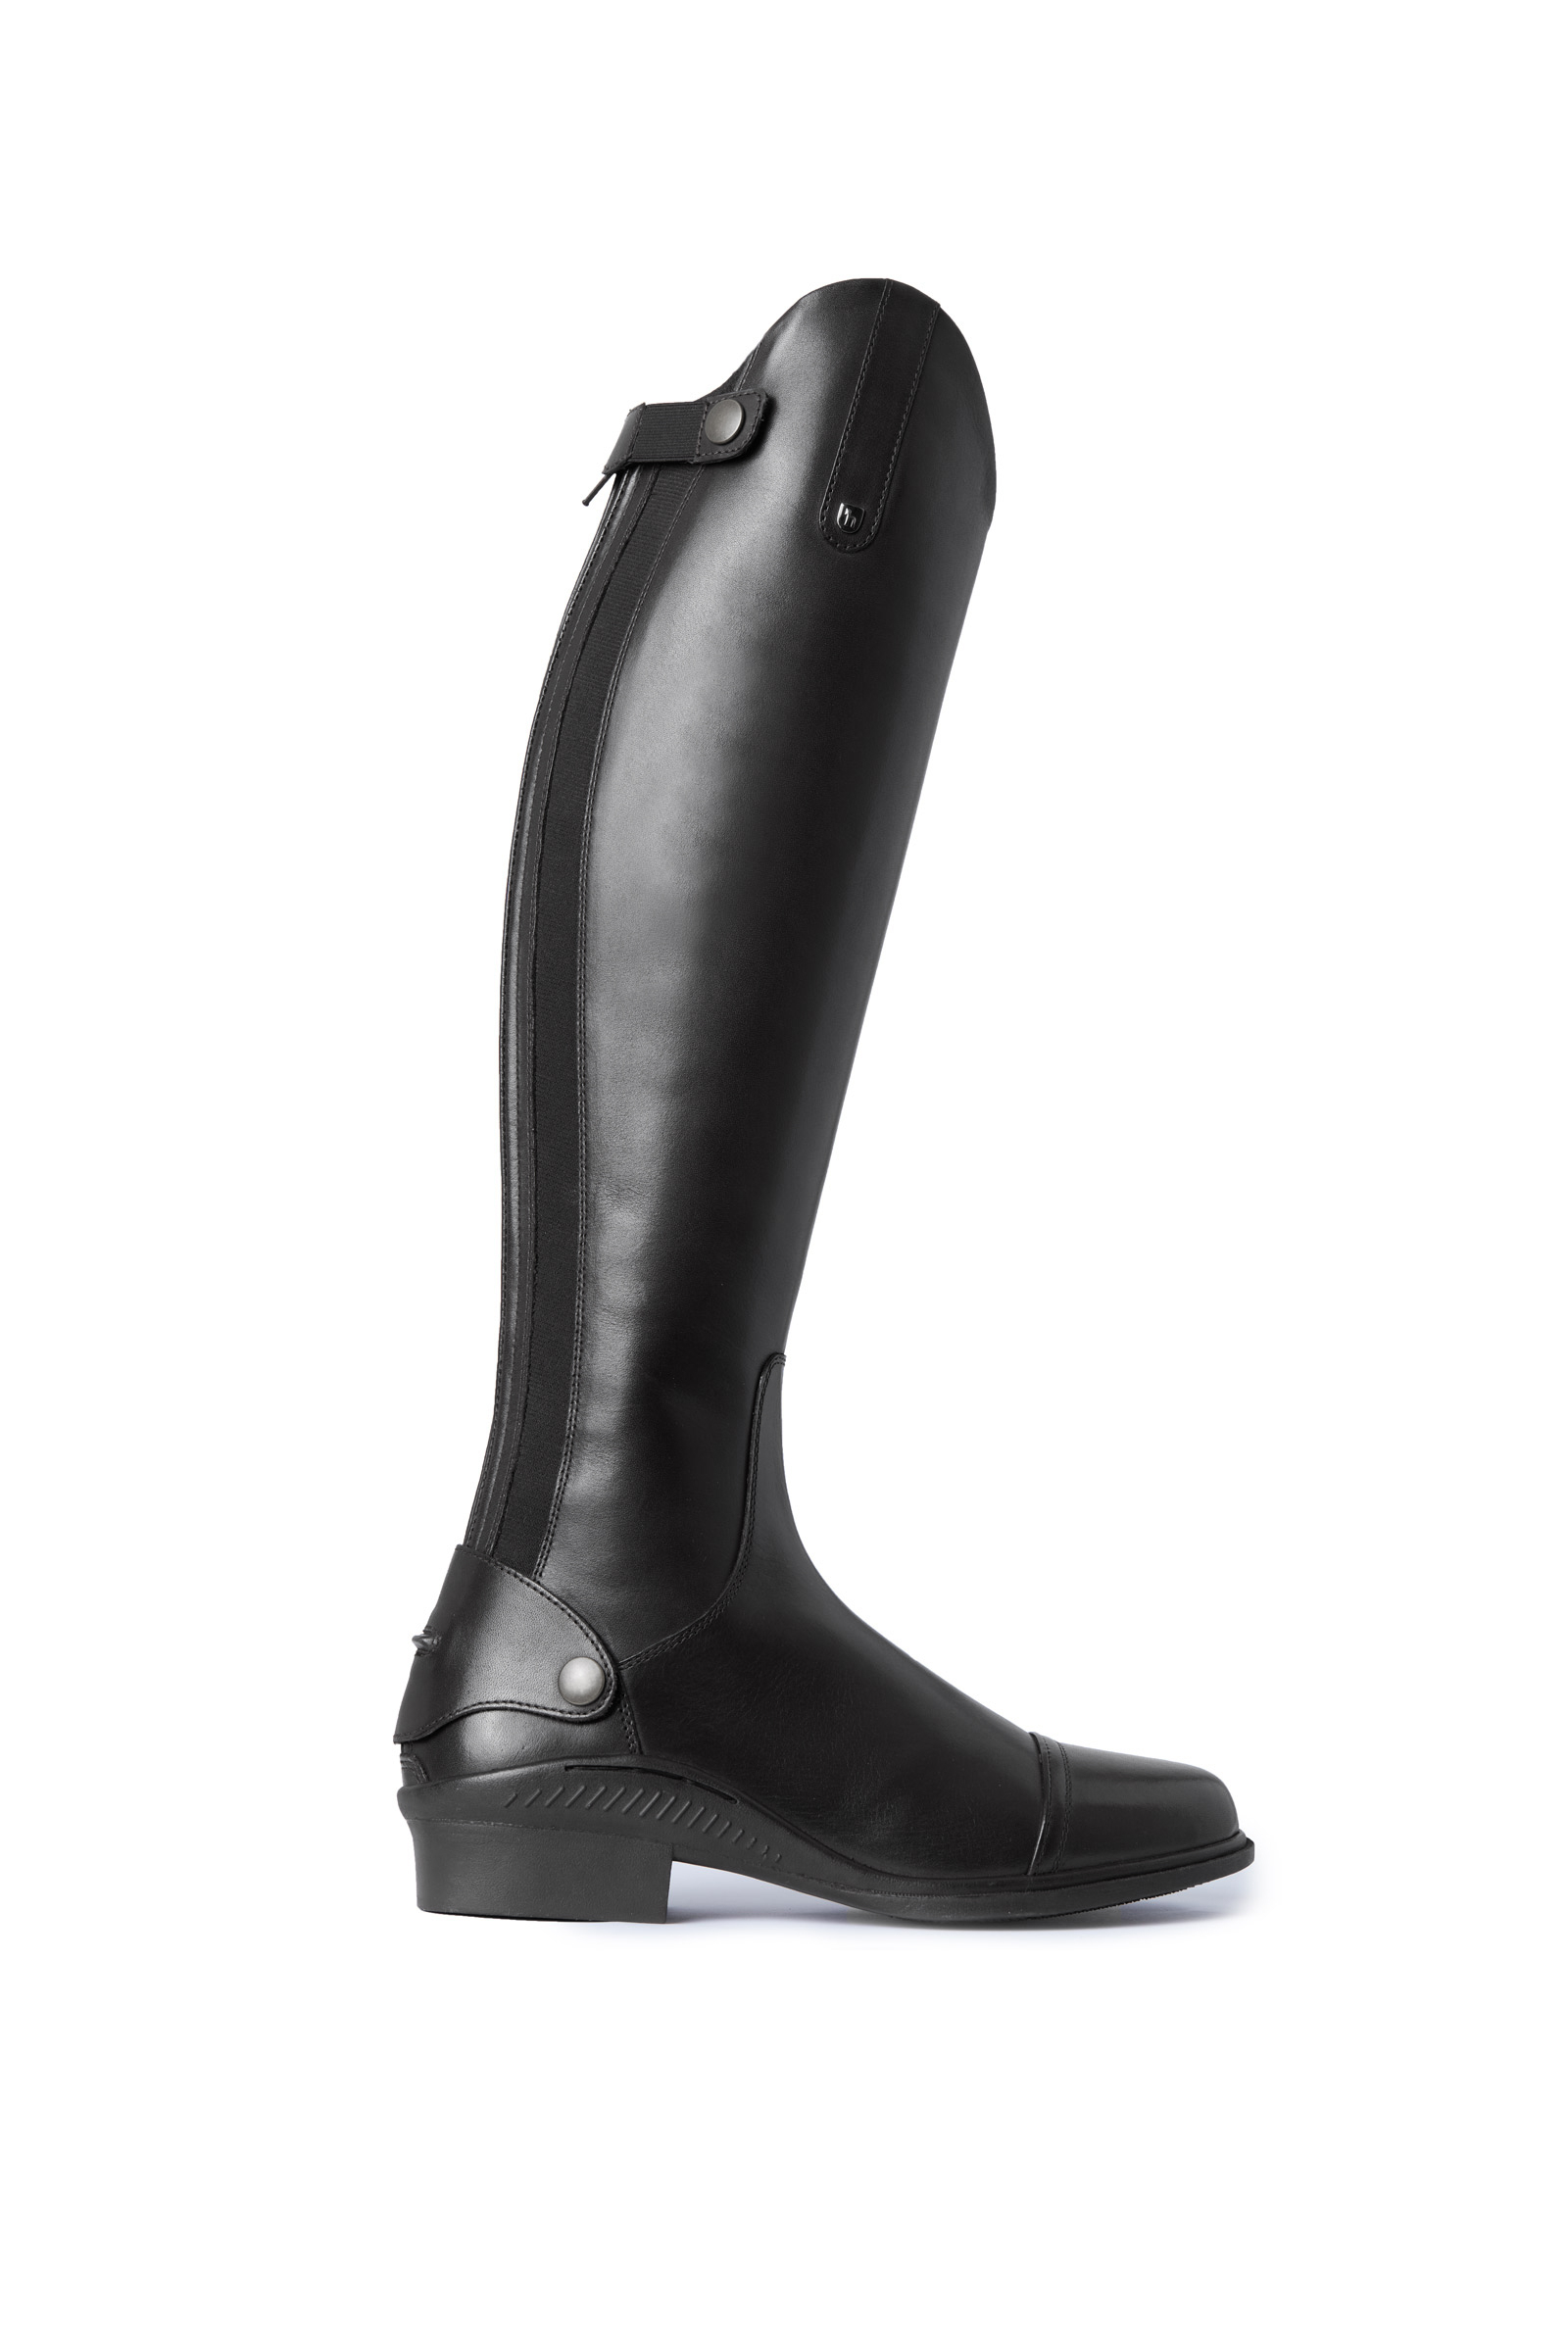 Buy Horze Genève Women's Leather Tall Boots